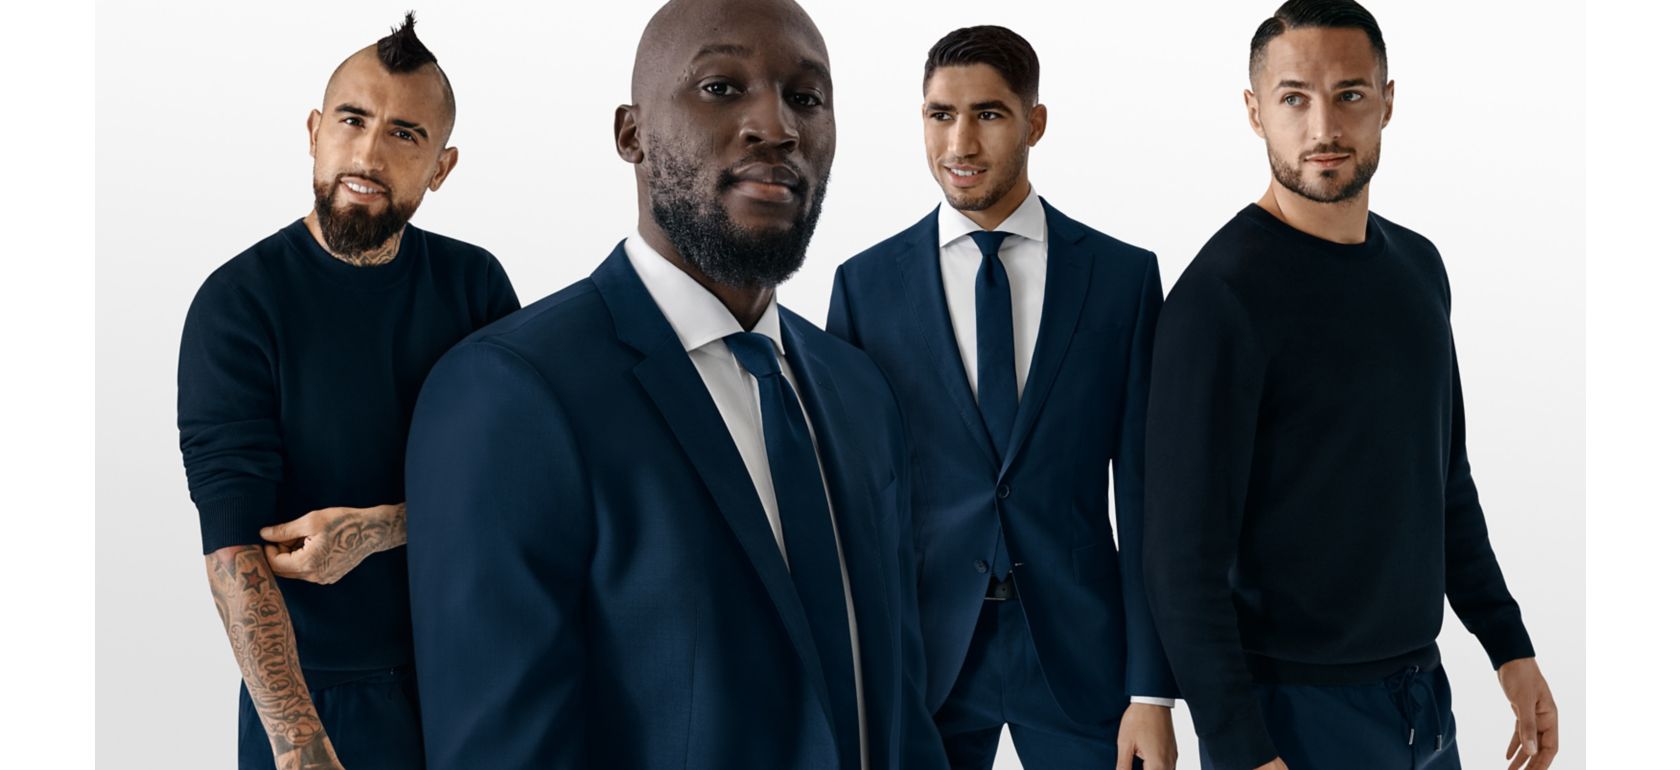 FC inter team dressed in dark blue BOSS Suits